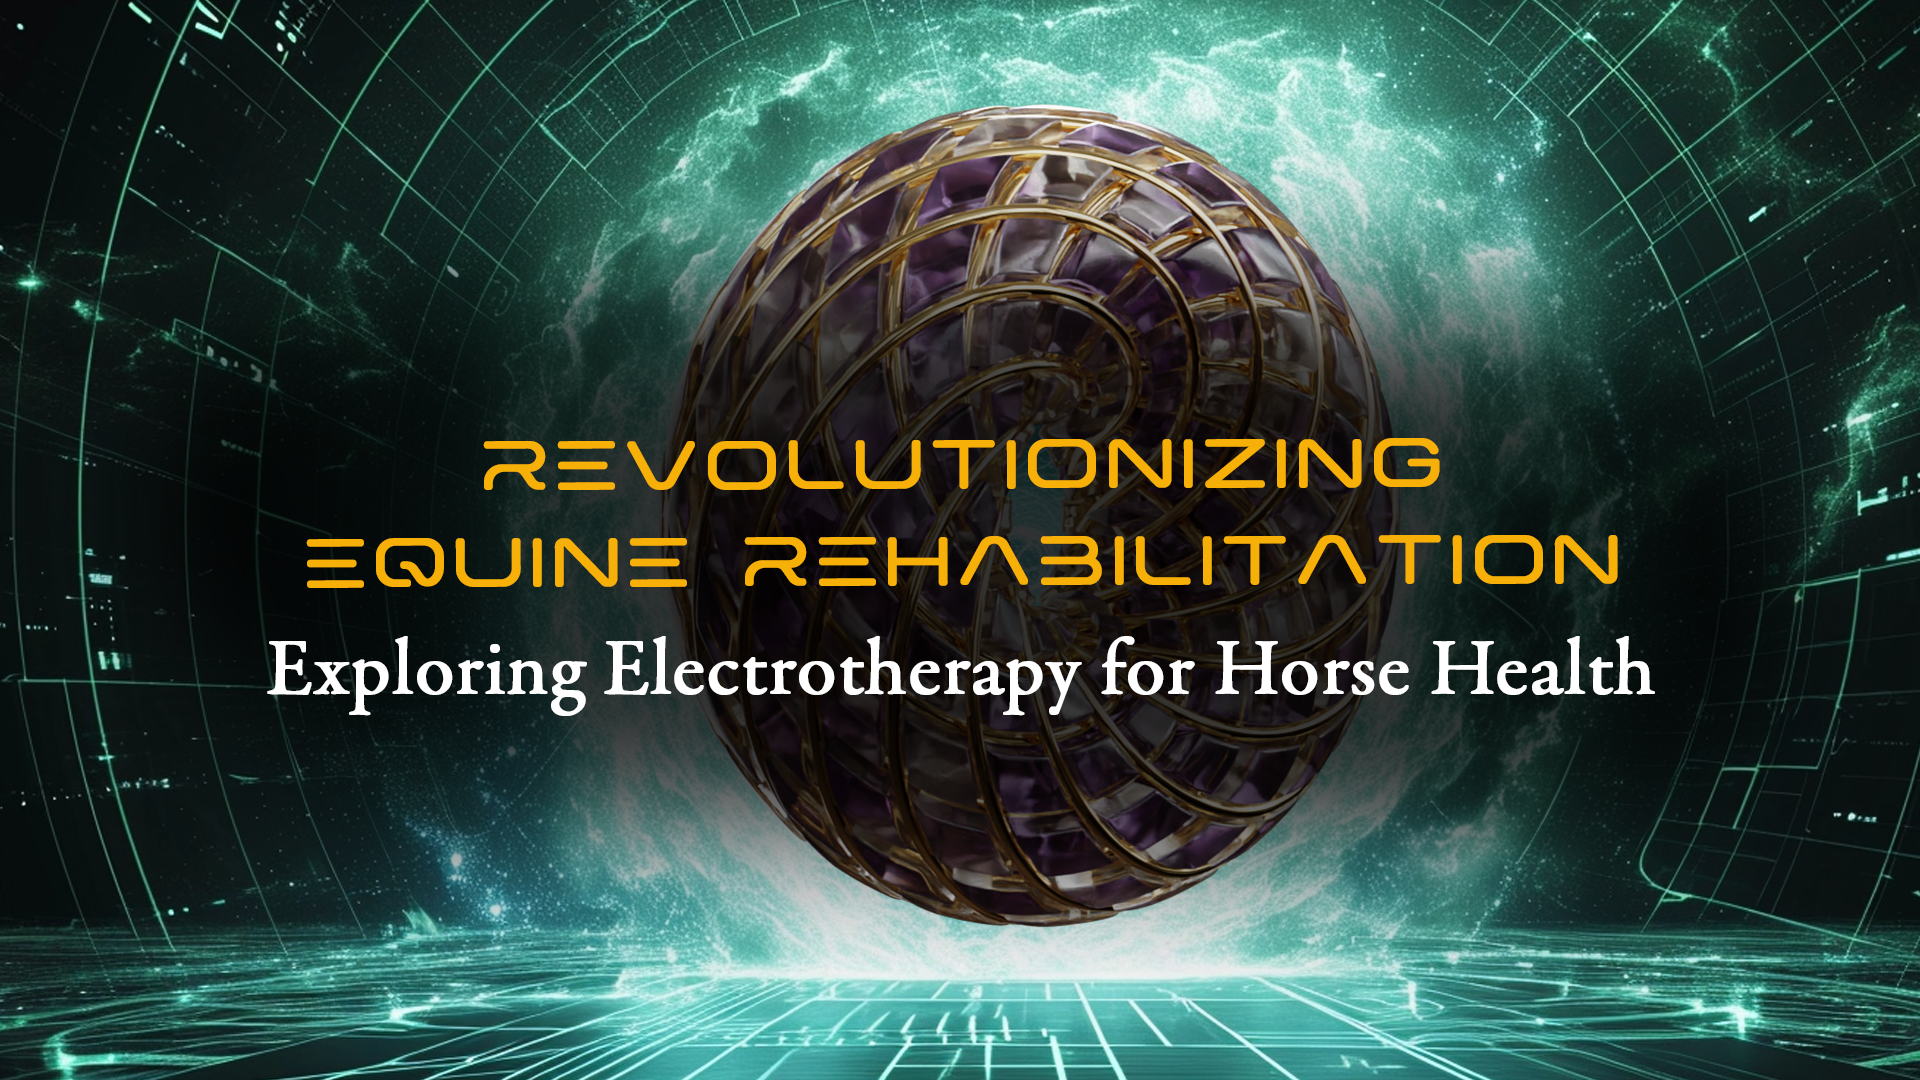 Revolutionizing Equine Rehabilitation: Exploring Electrotherapy for Horse Health